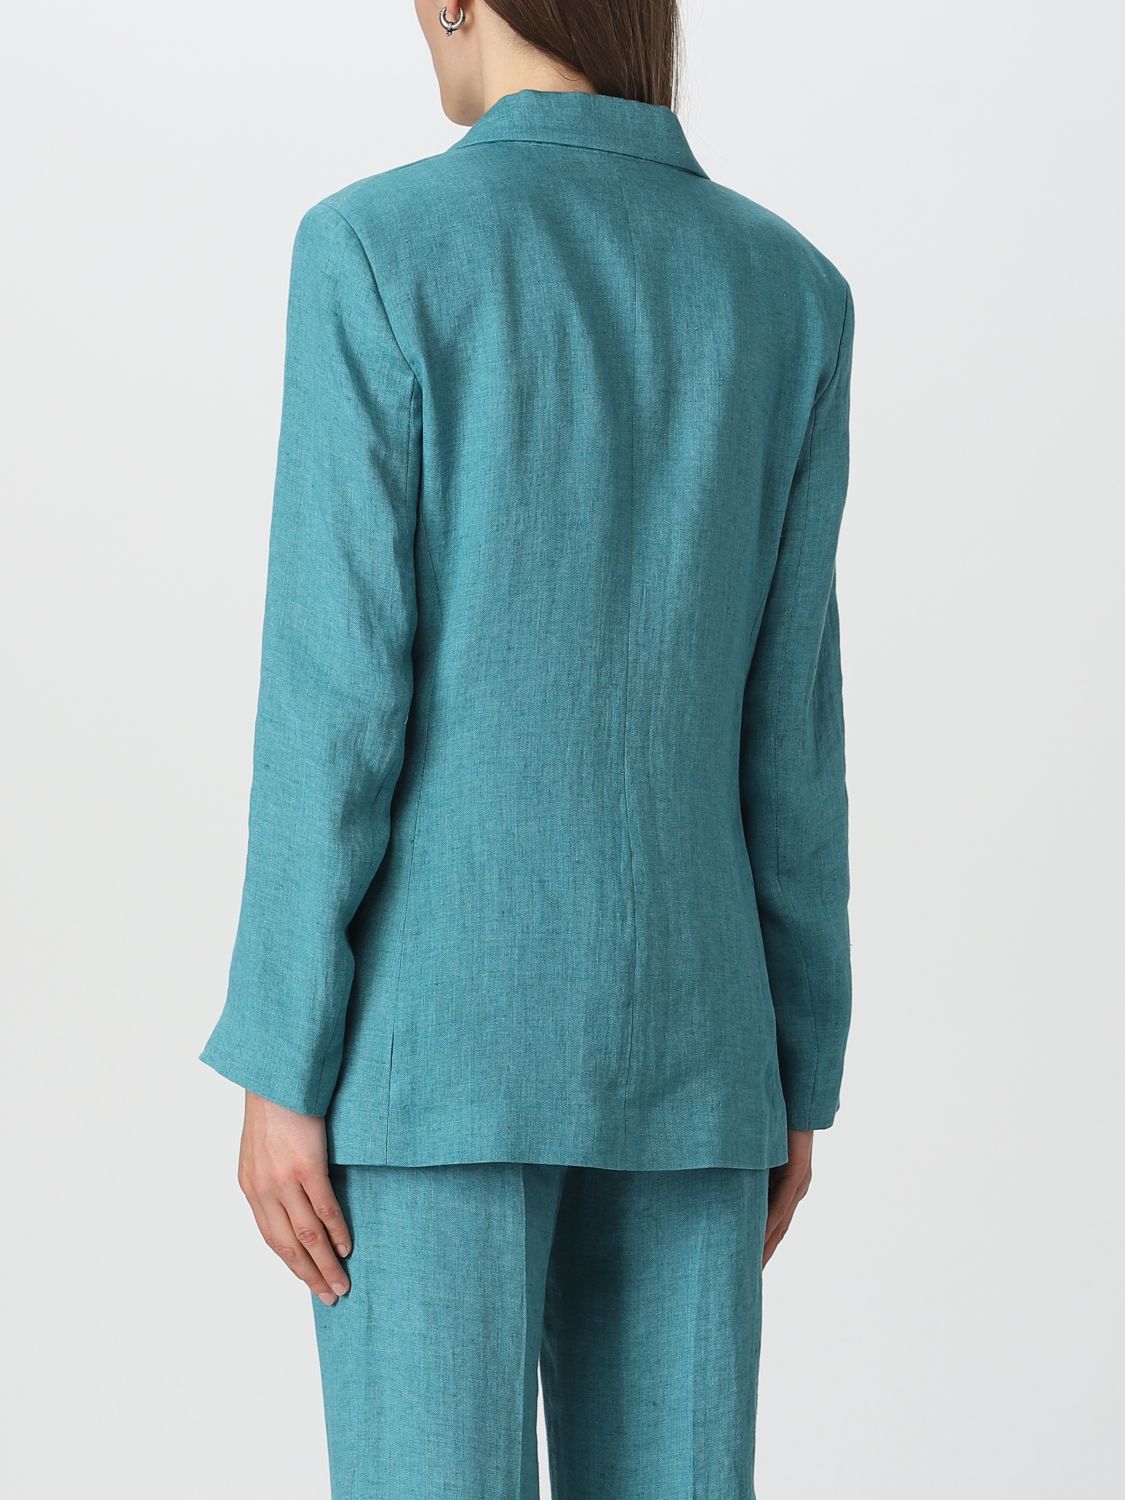 Jacket Maliparmi: Maliparmi jacket for women green 3